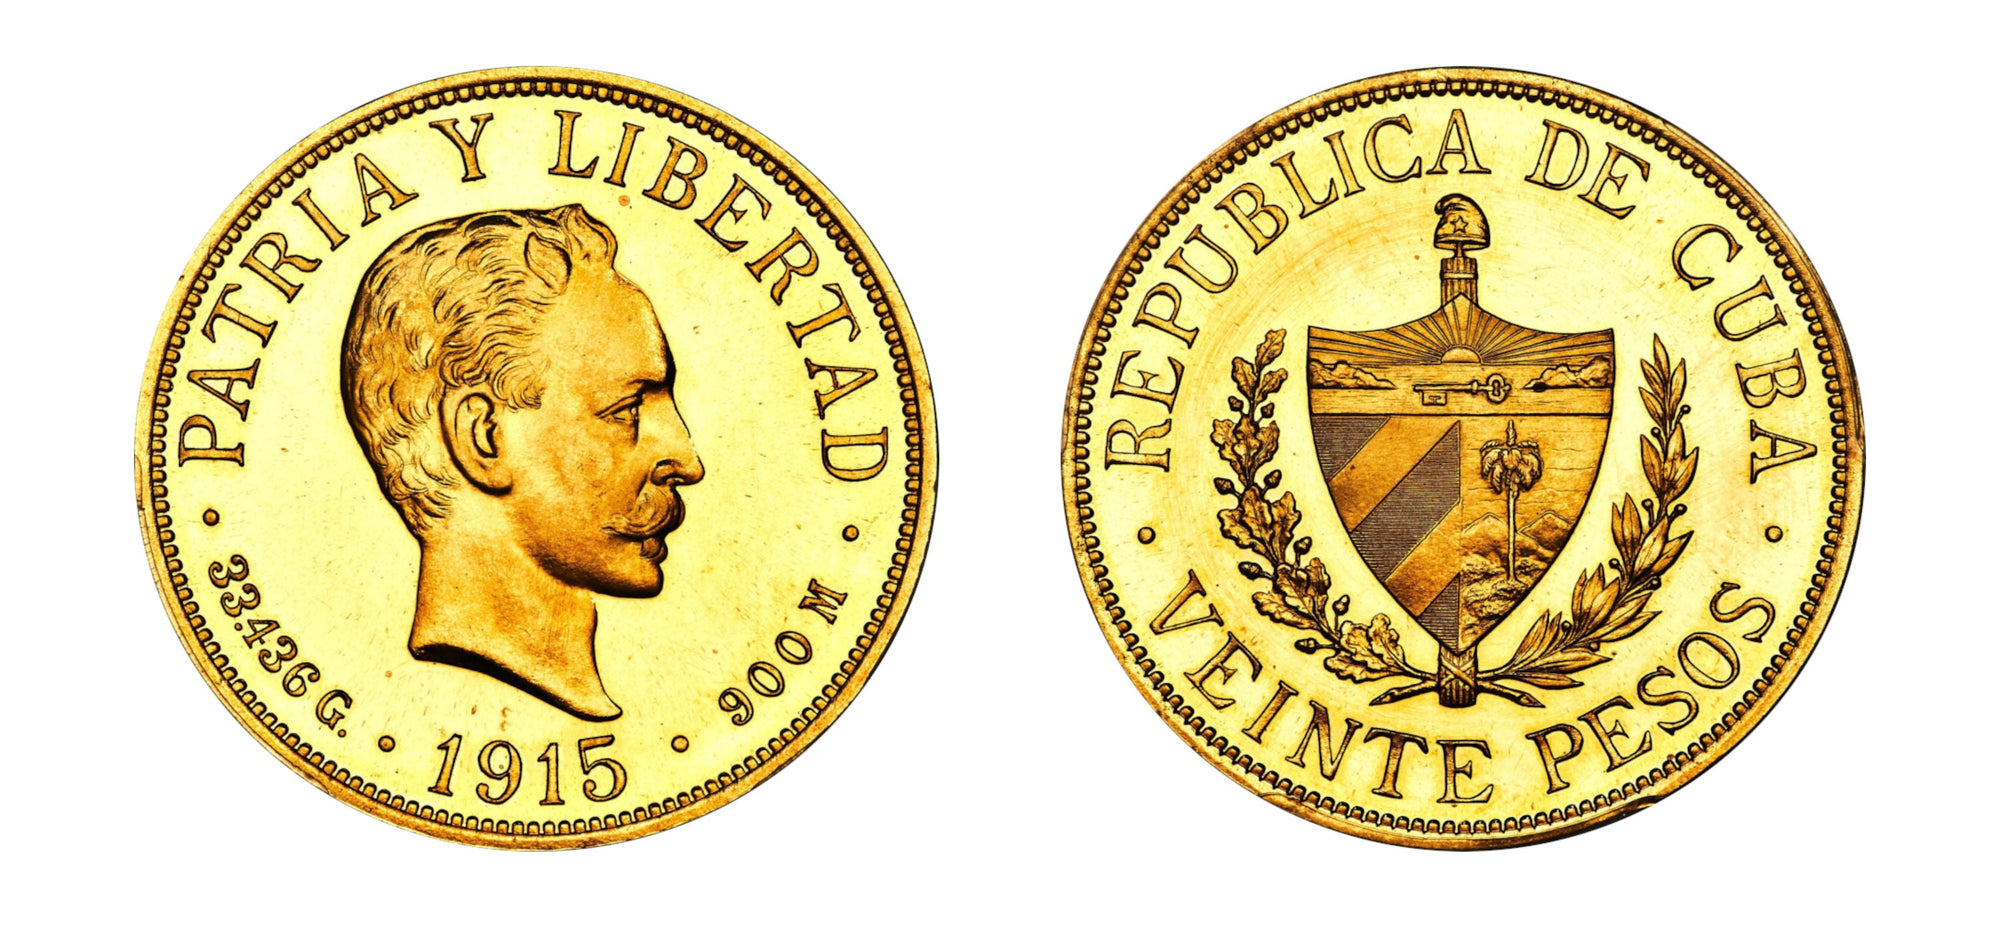 1915-Cuba Gold 20 Pesos PCGS PR 63 Cameo - Hard Asset Management, Inc